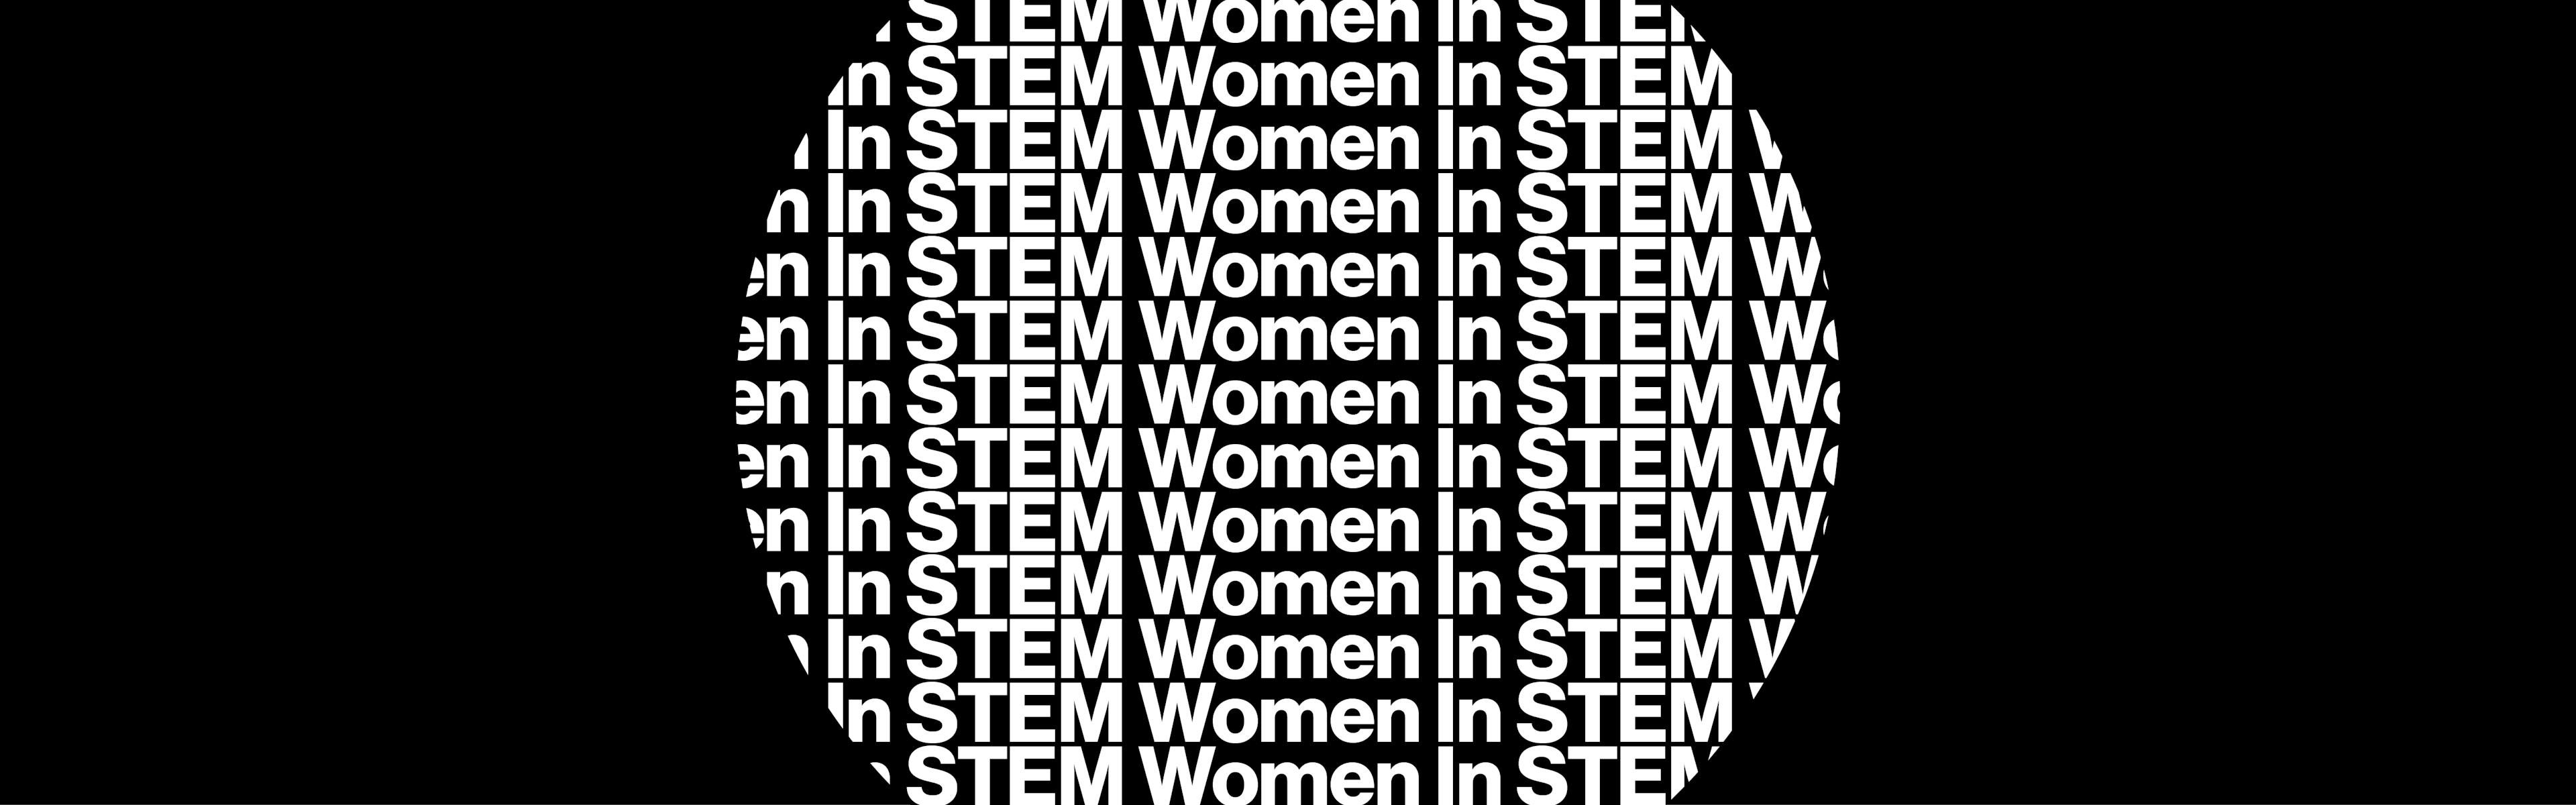 "Women in STEM" in graphic text art.